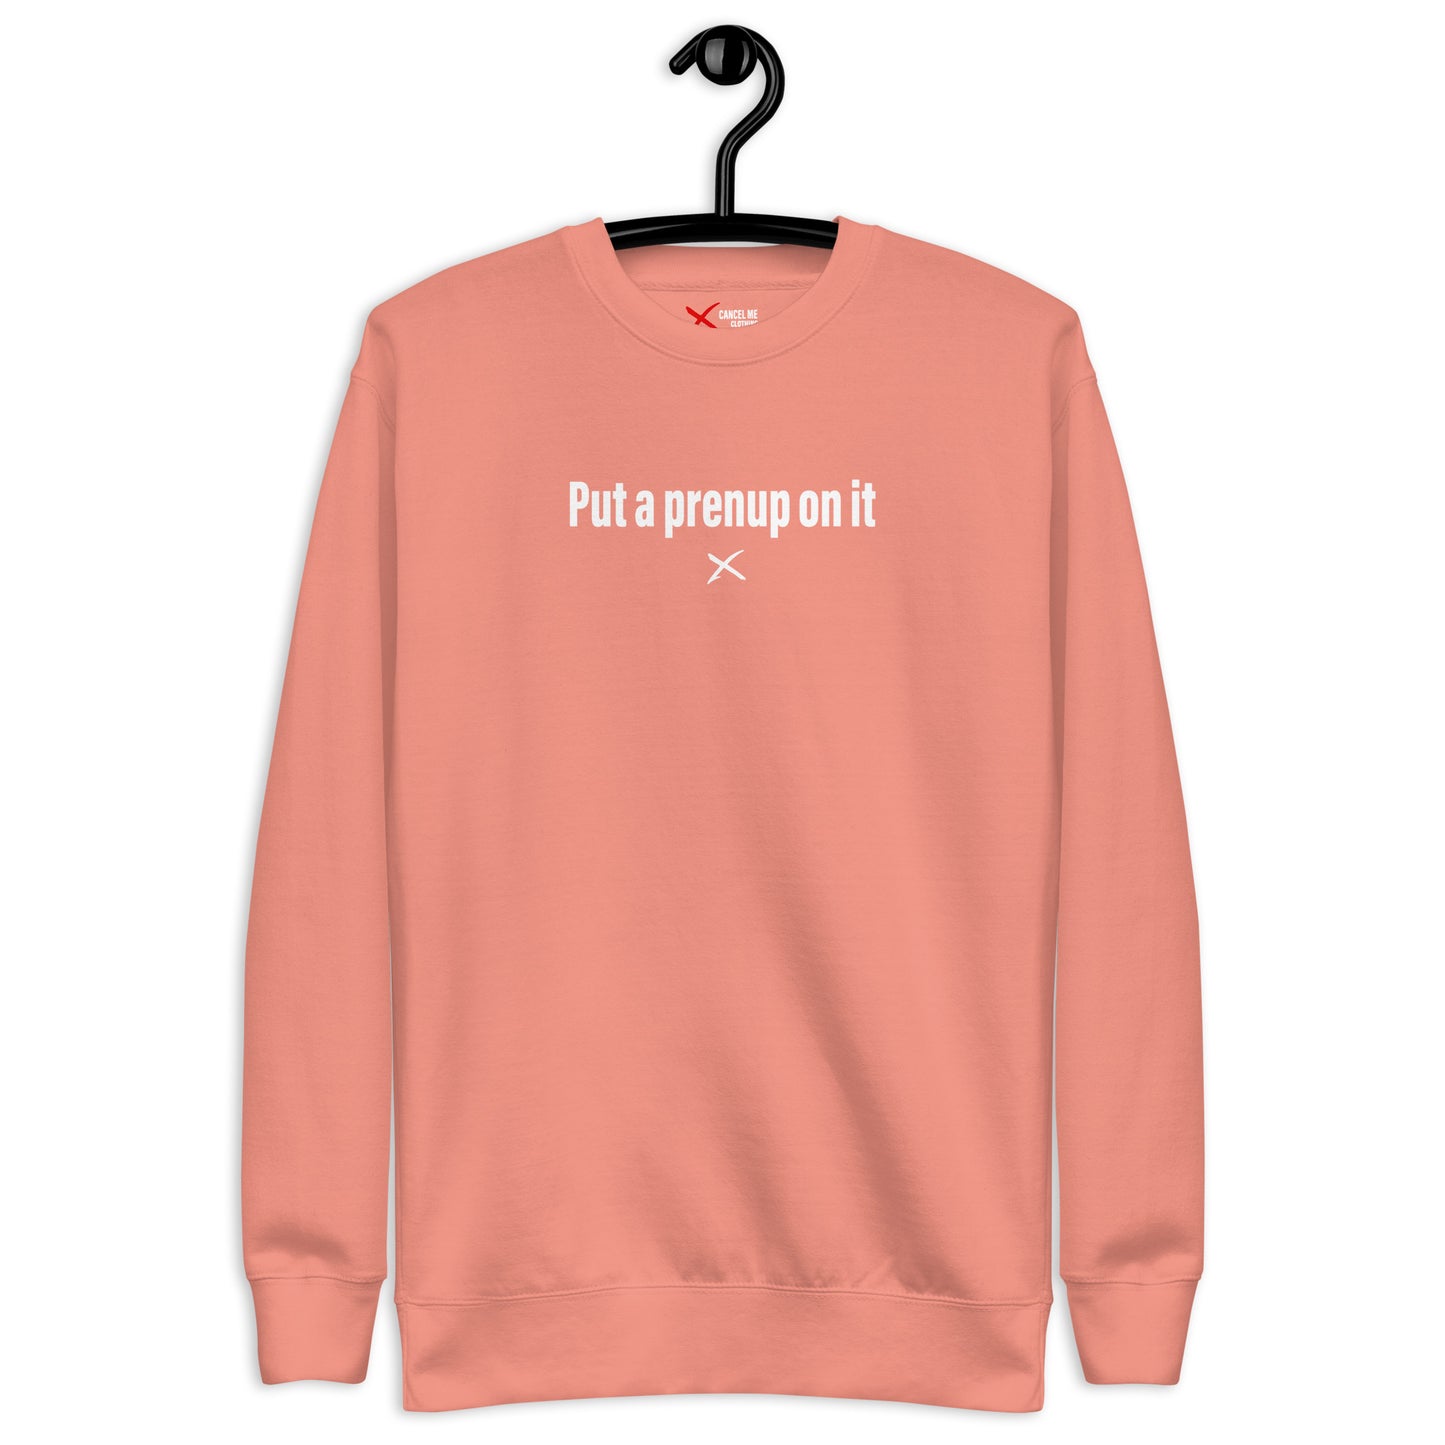 Put a prenup on it - Sweatshirt